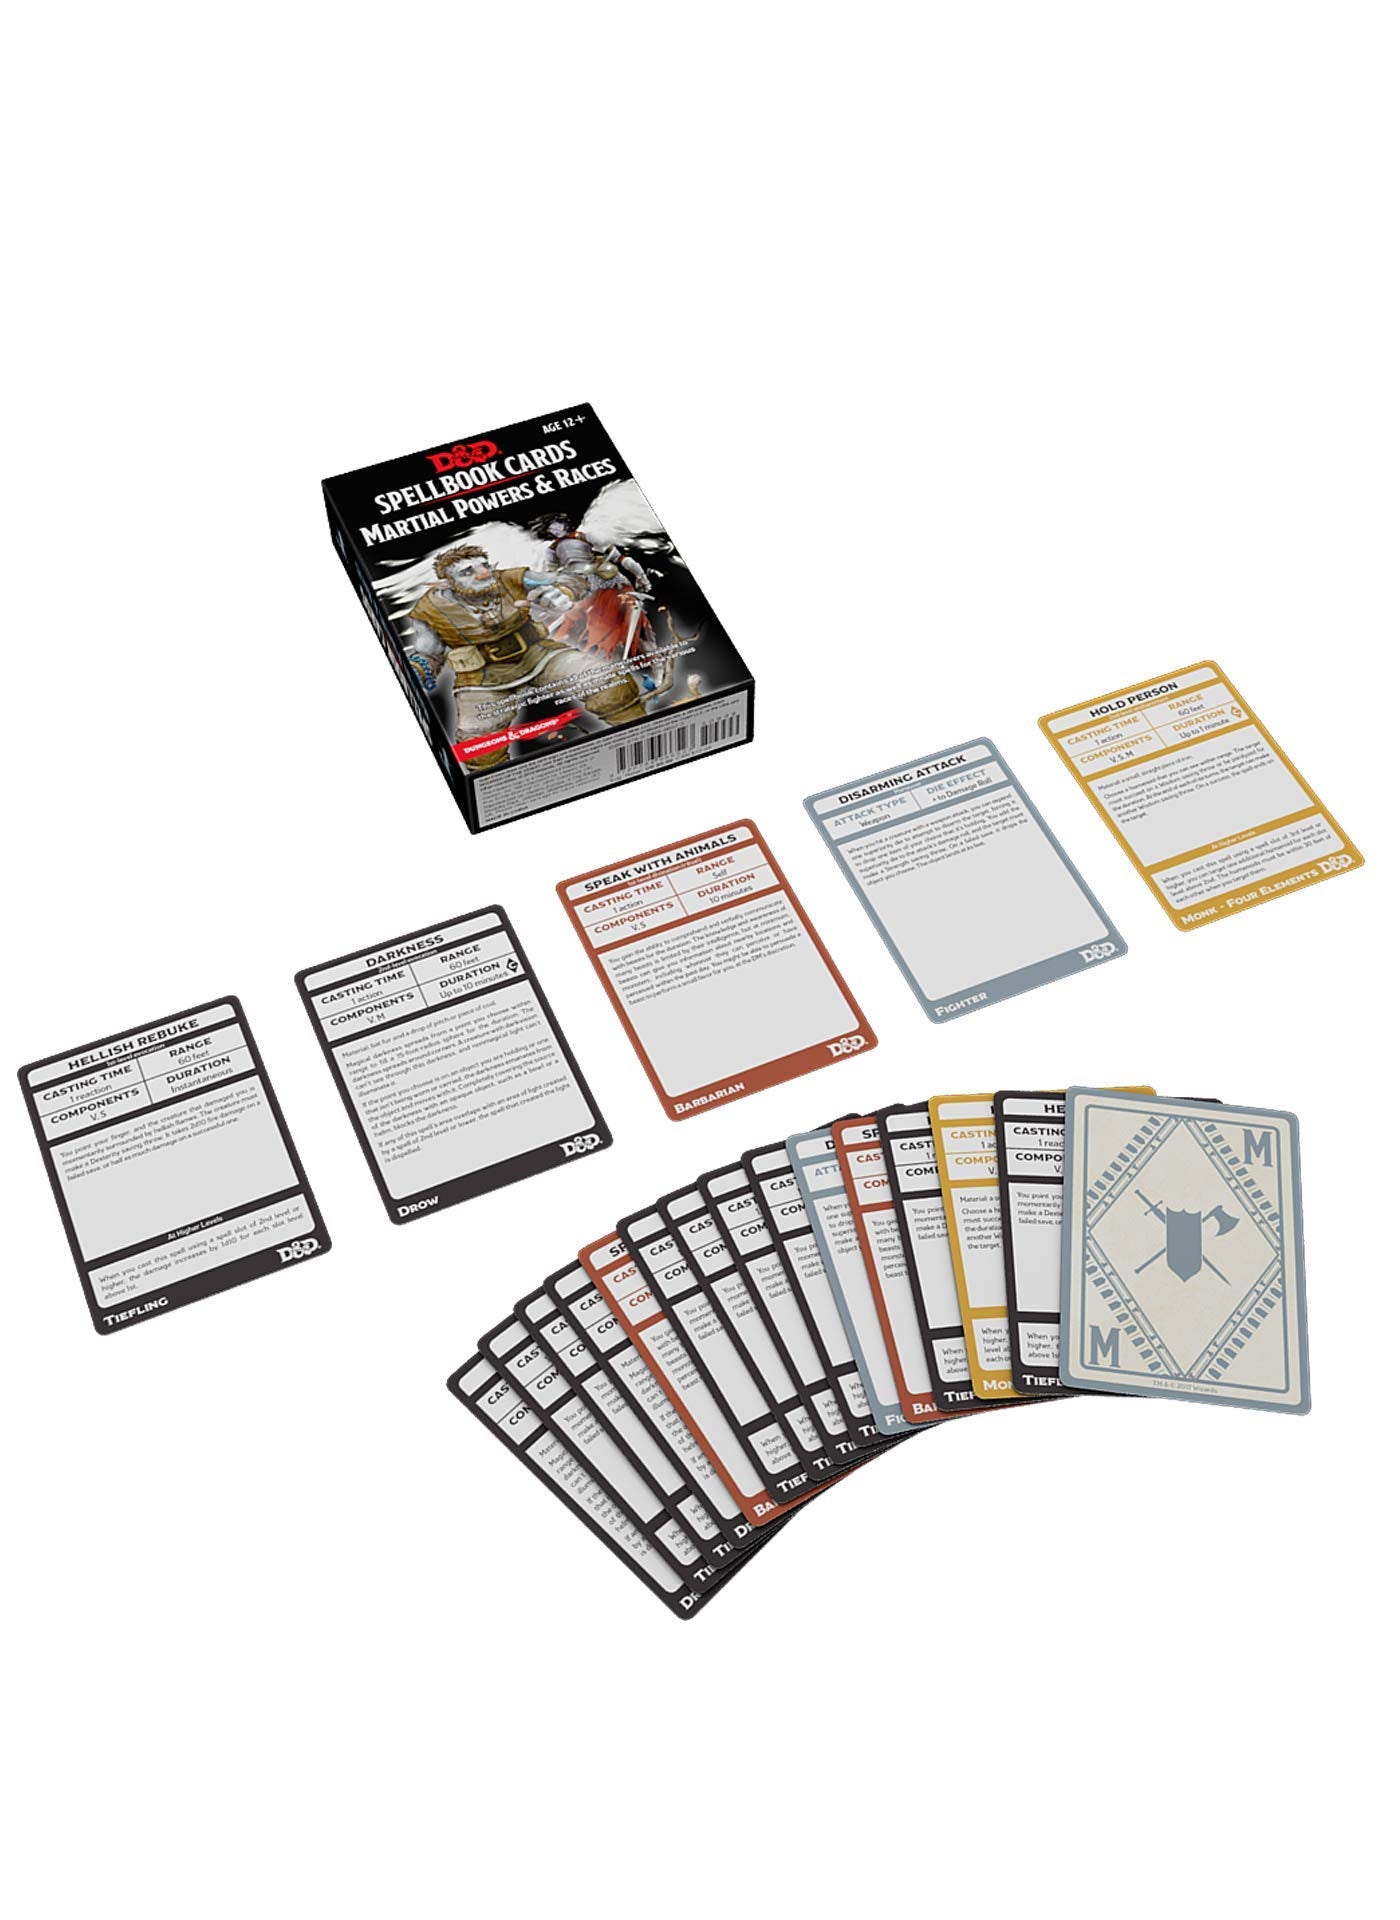 D&D Spellbook Cards: Martial